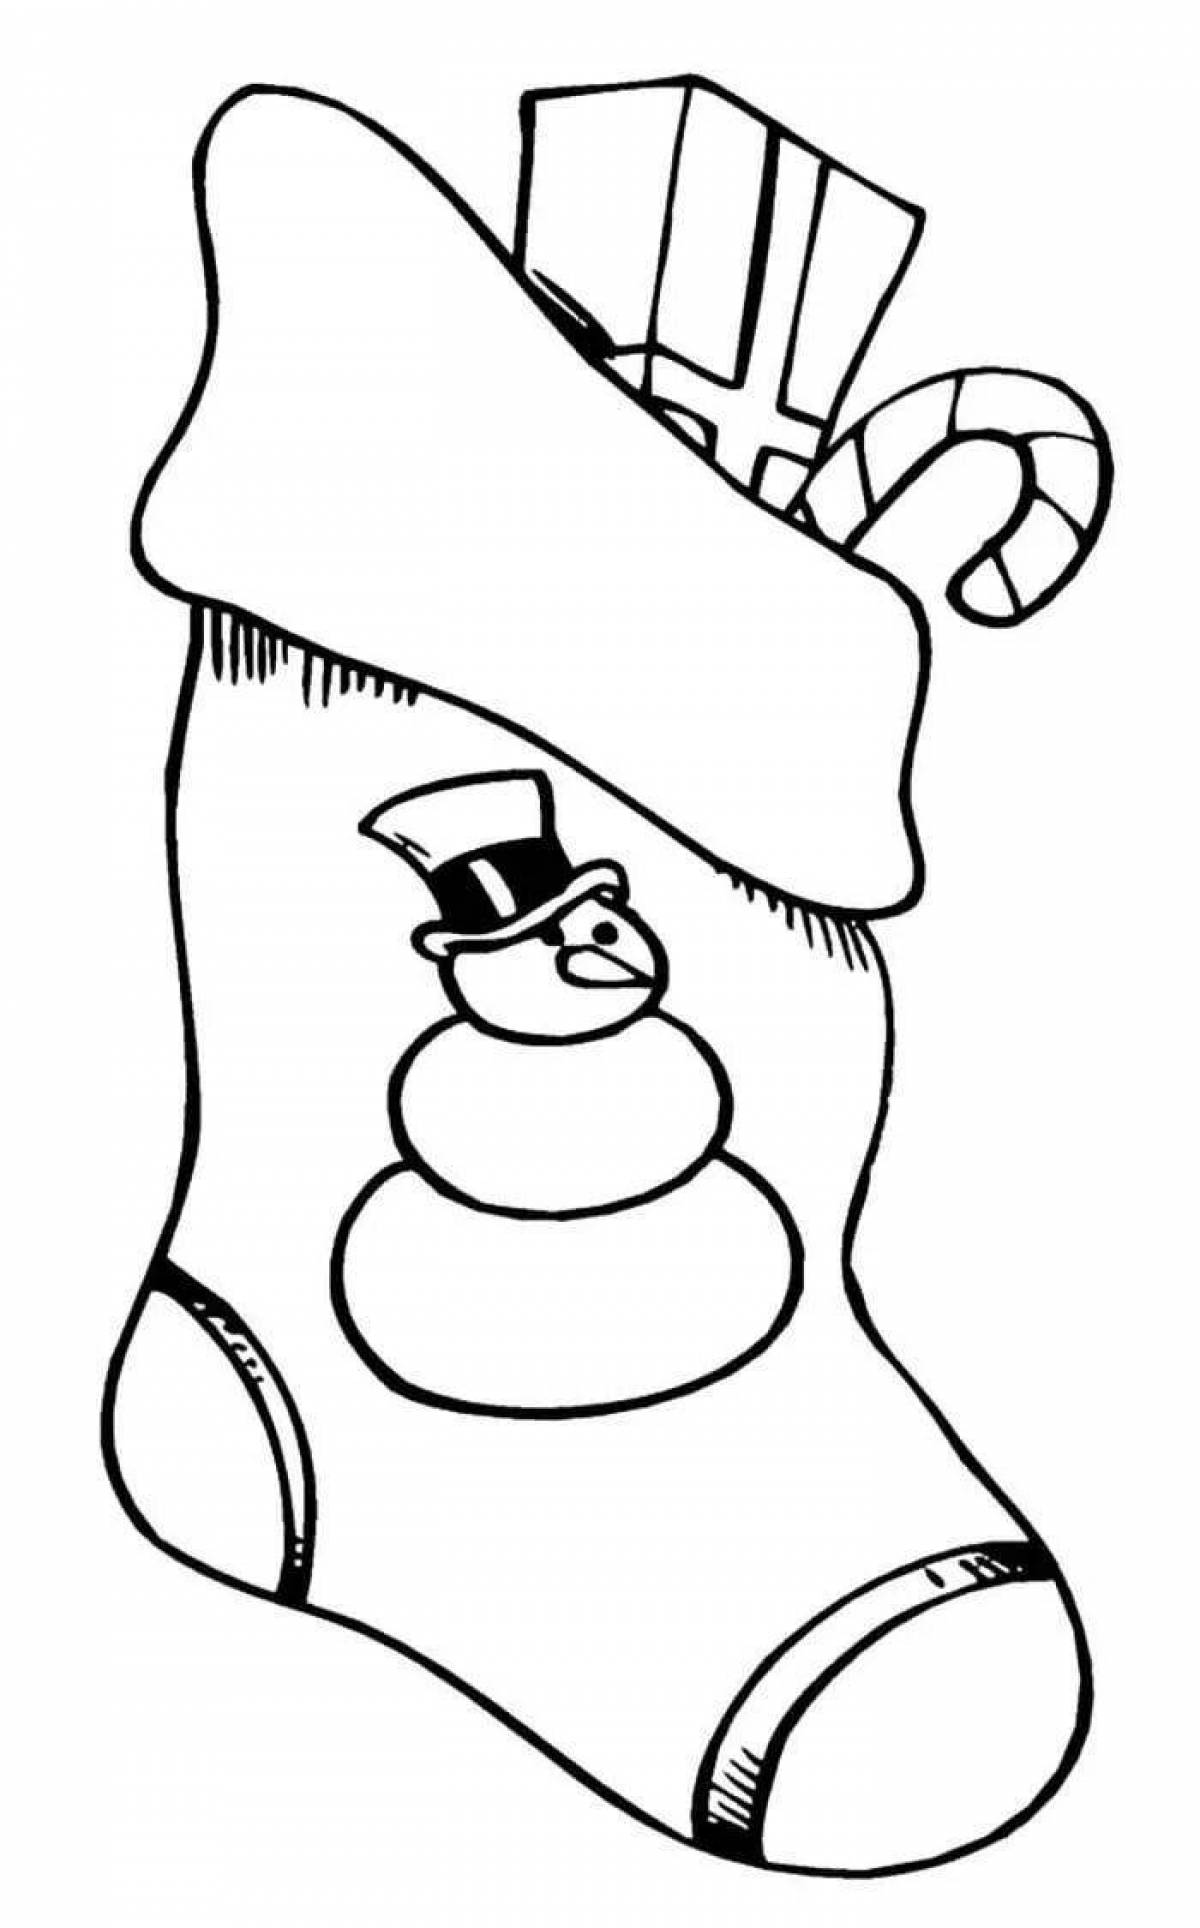 Fantastic Christmas boot coloring